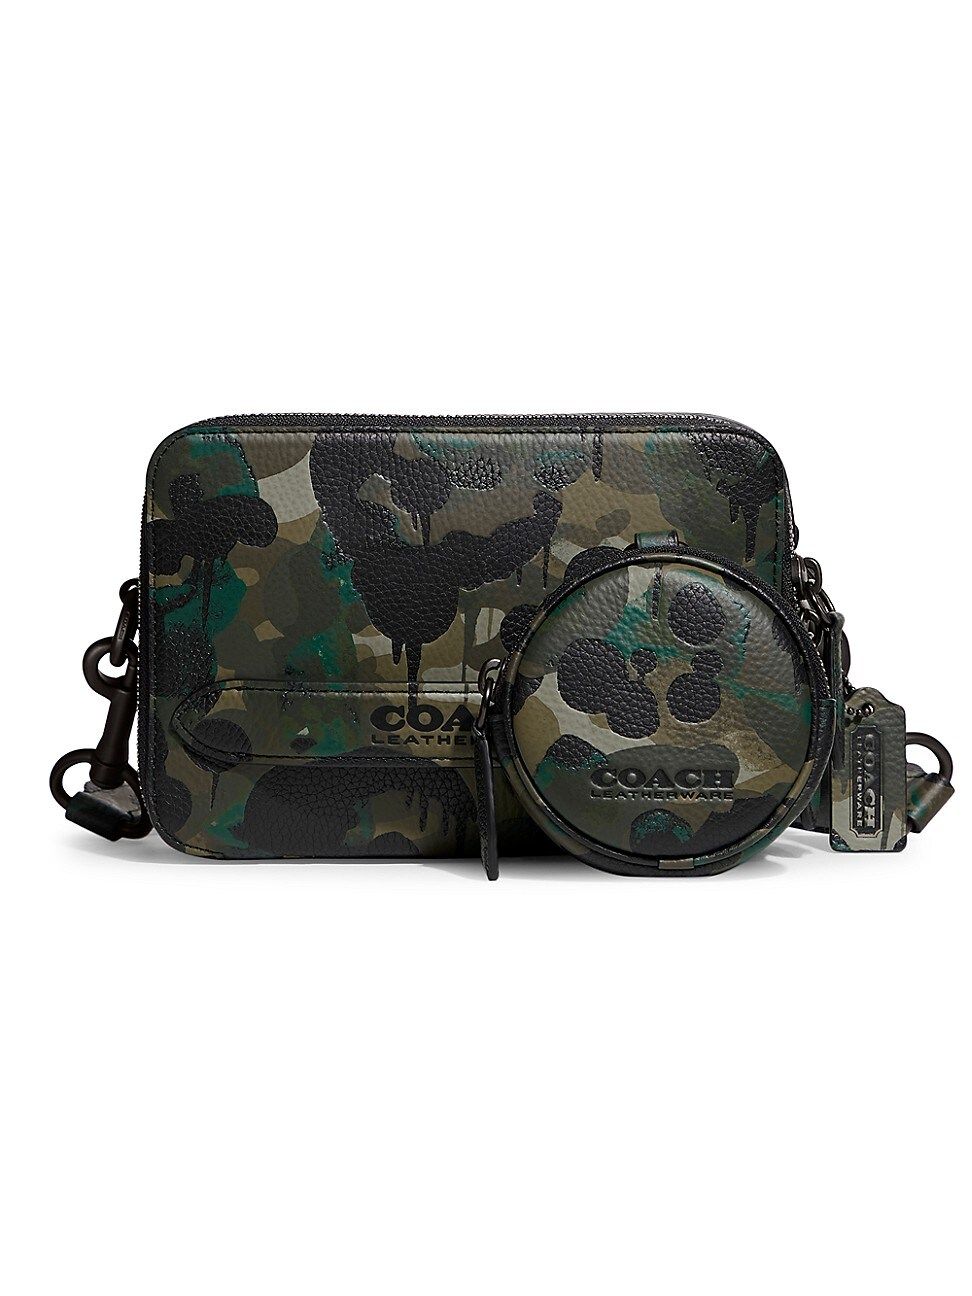 COACH Charter Camo-Coated Pebble Leather Messenger Bag | Saks Fifth Avenue